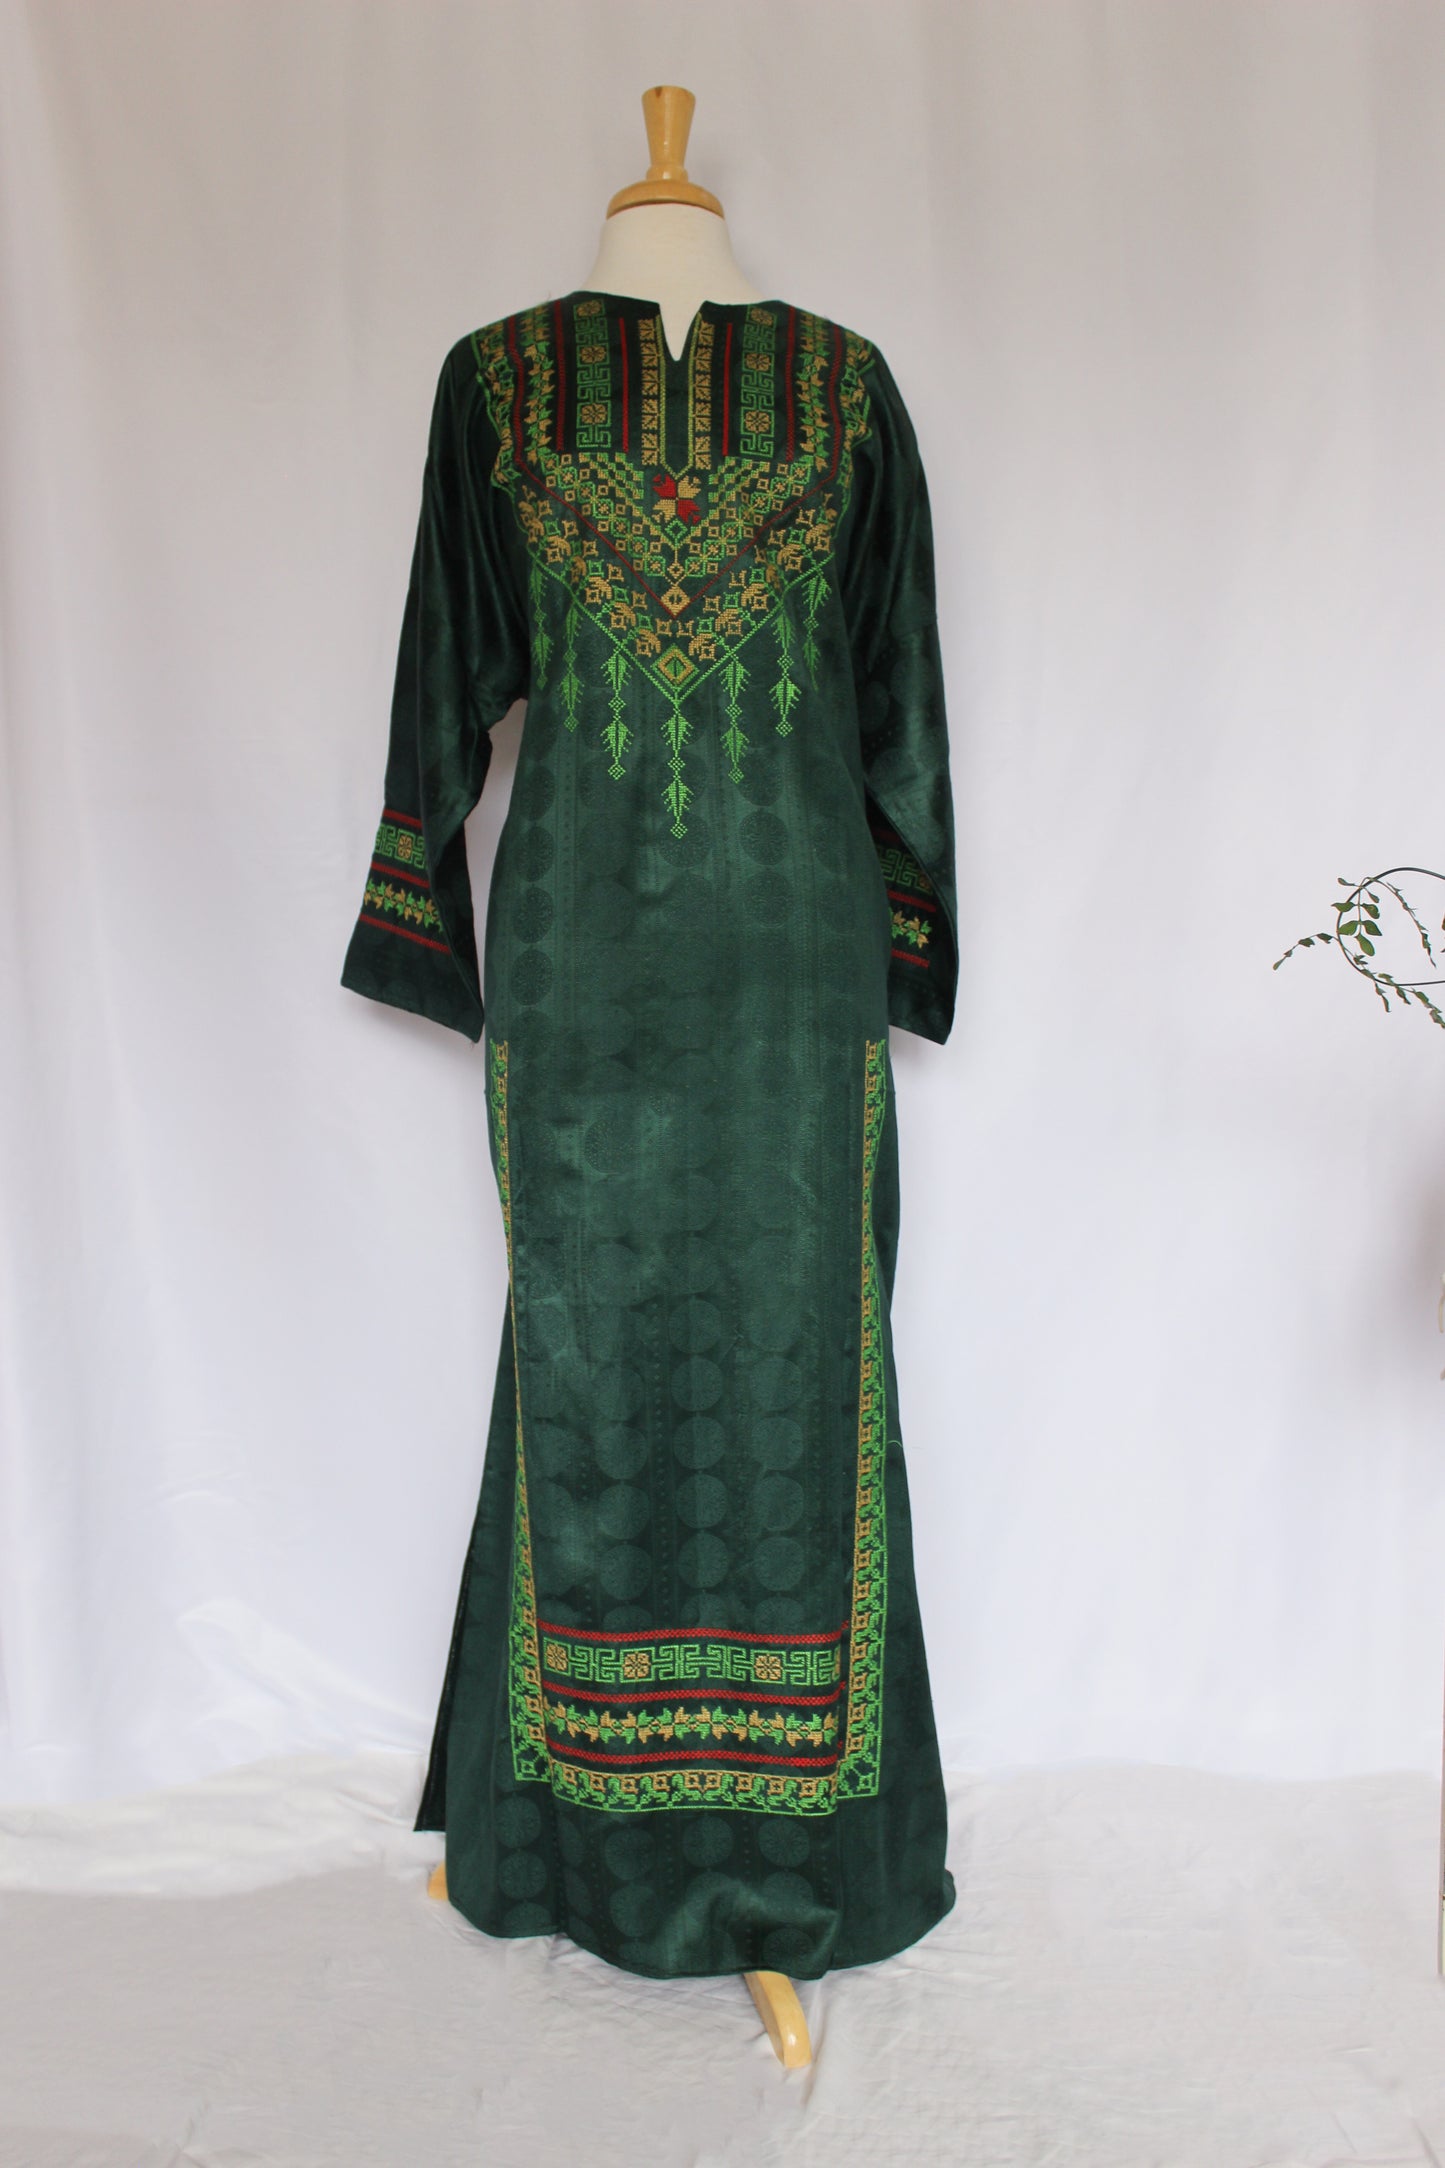 The Shireen Dress